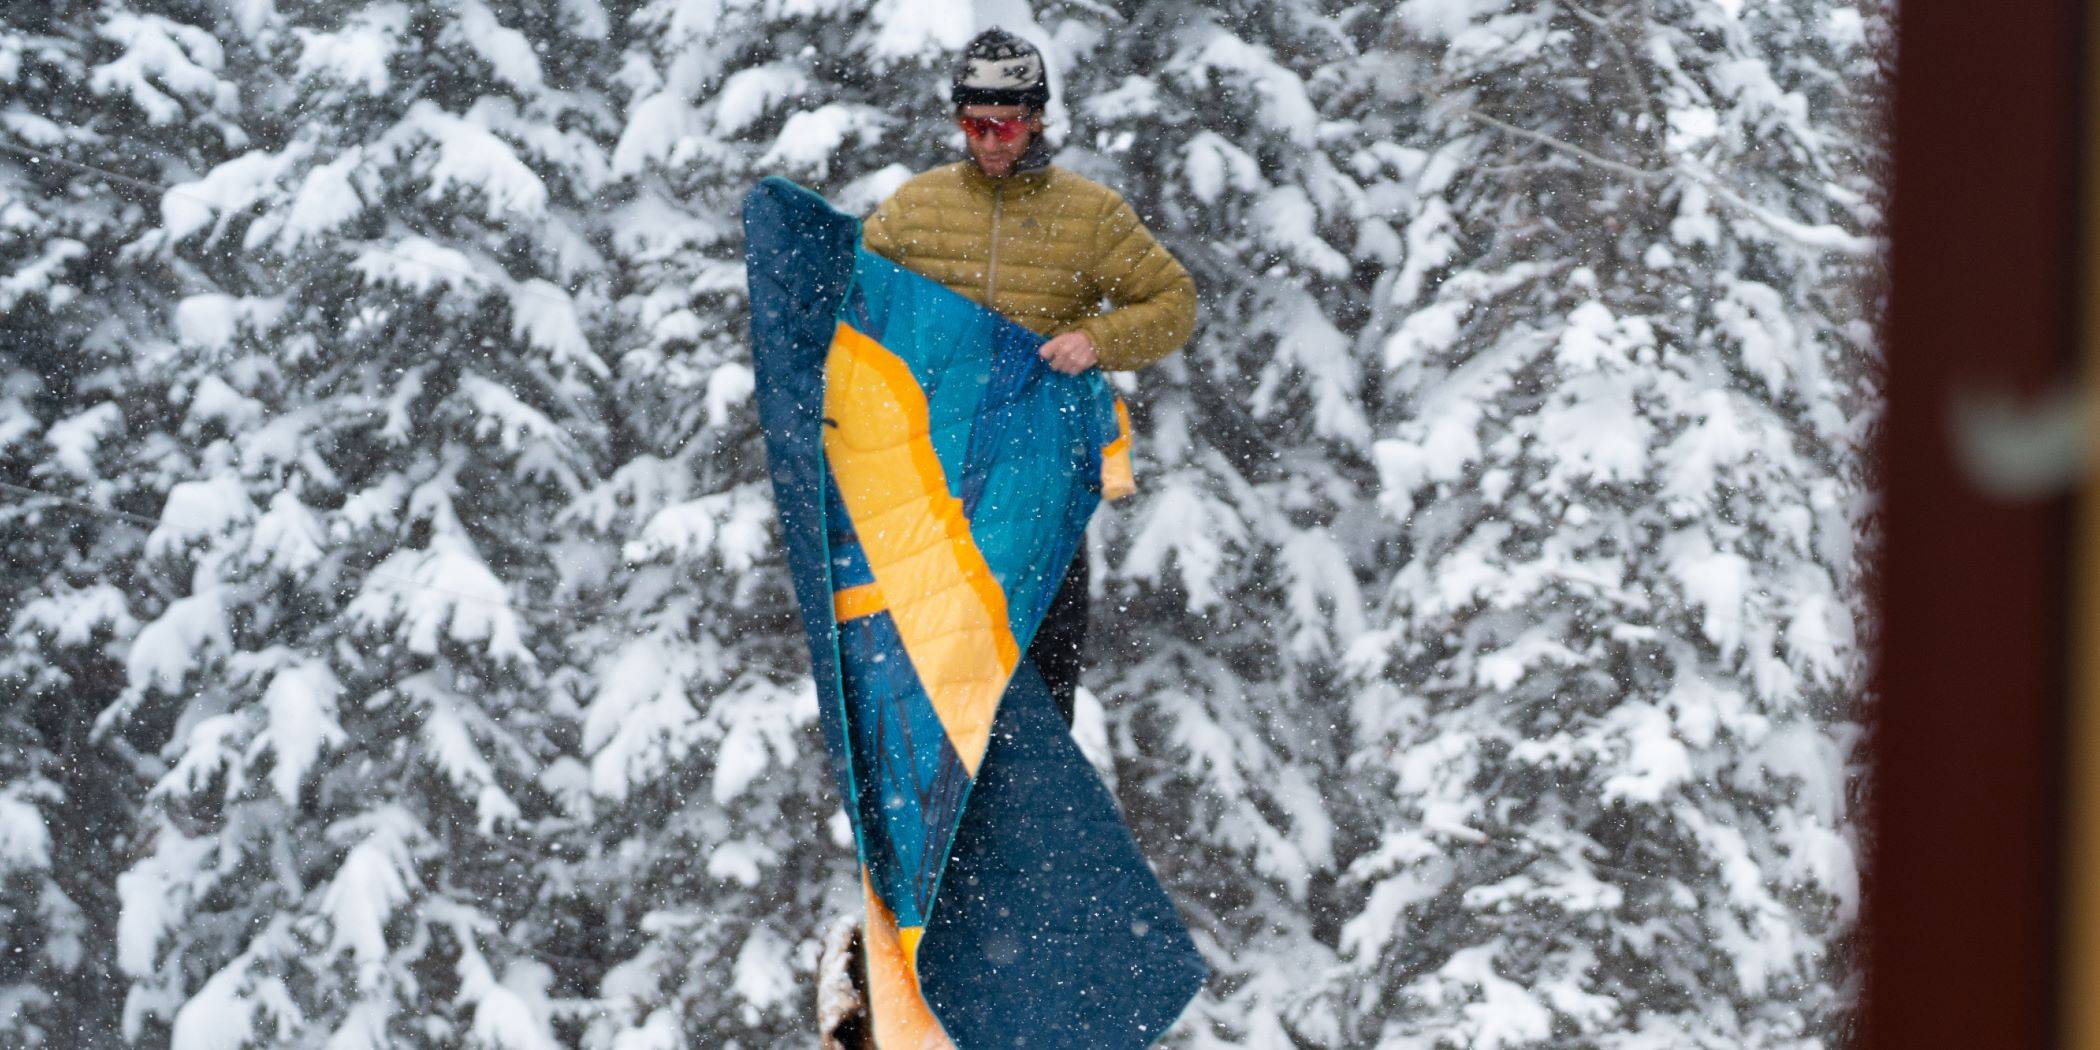 Joseph Toney in his snowy element - holding up the Original Puffy Blanket - Ridgeline Views